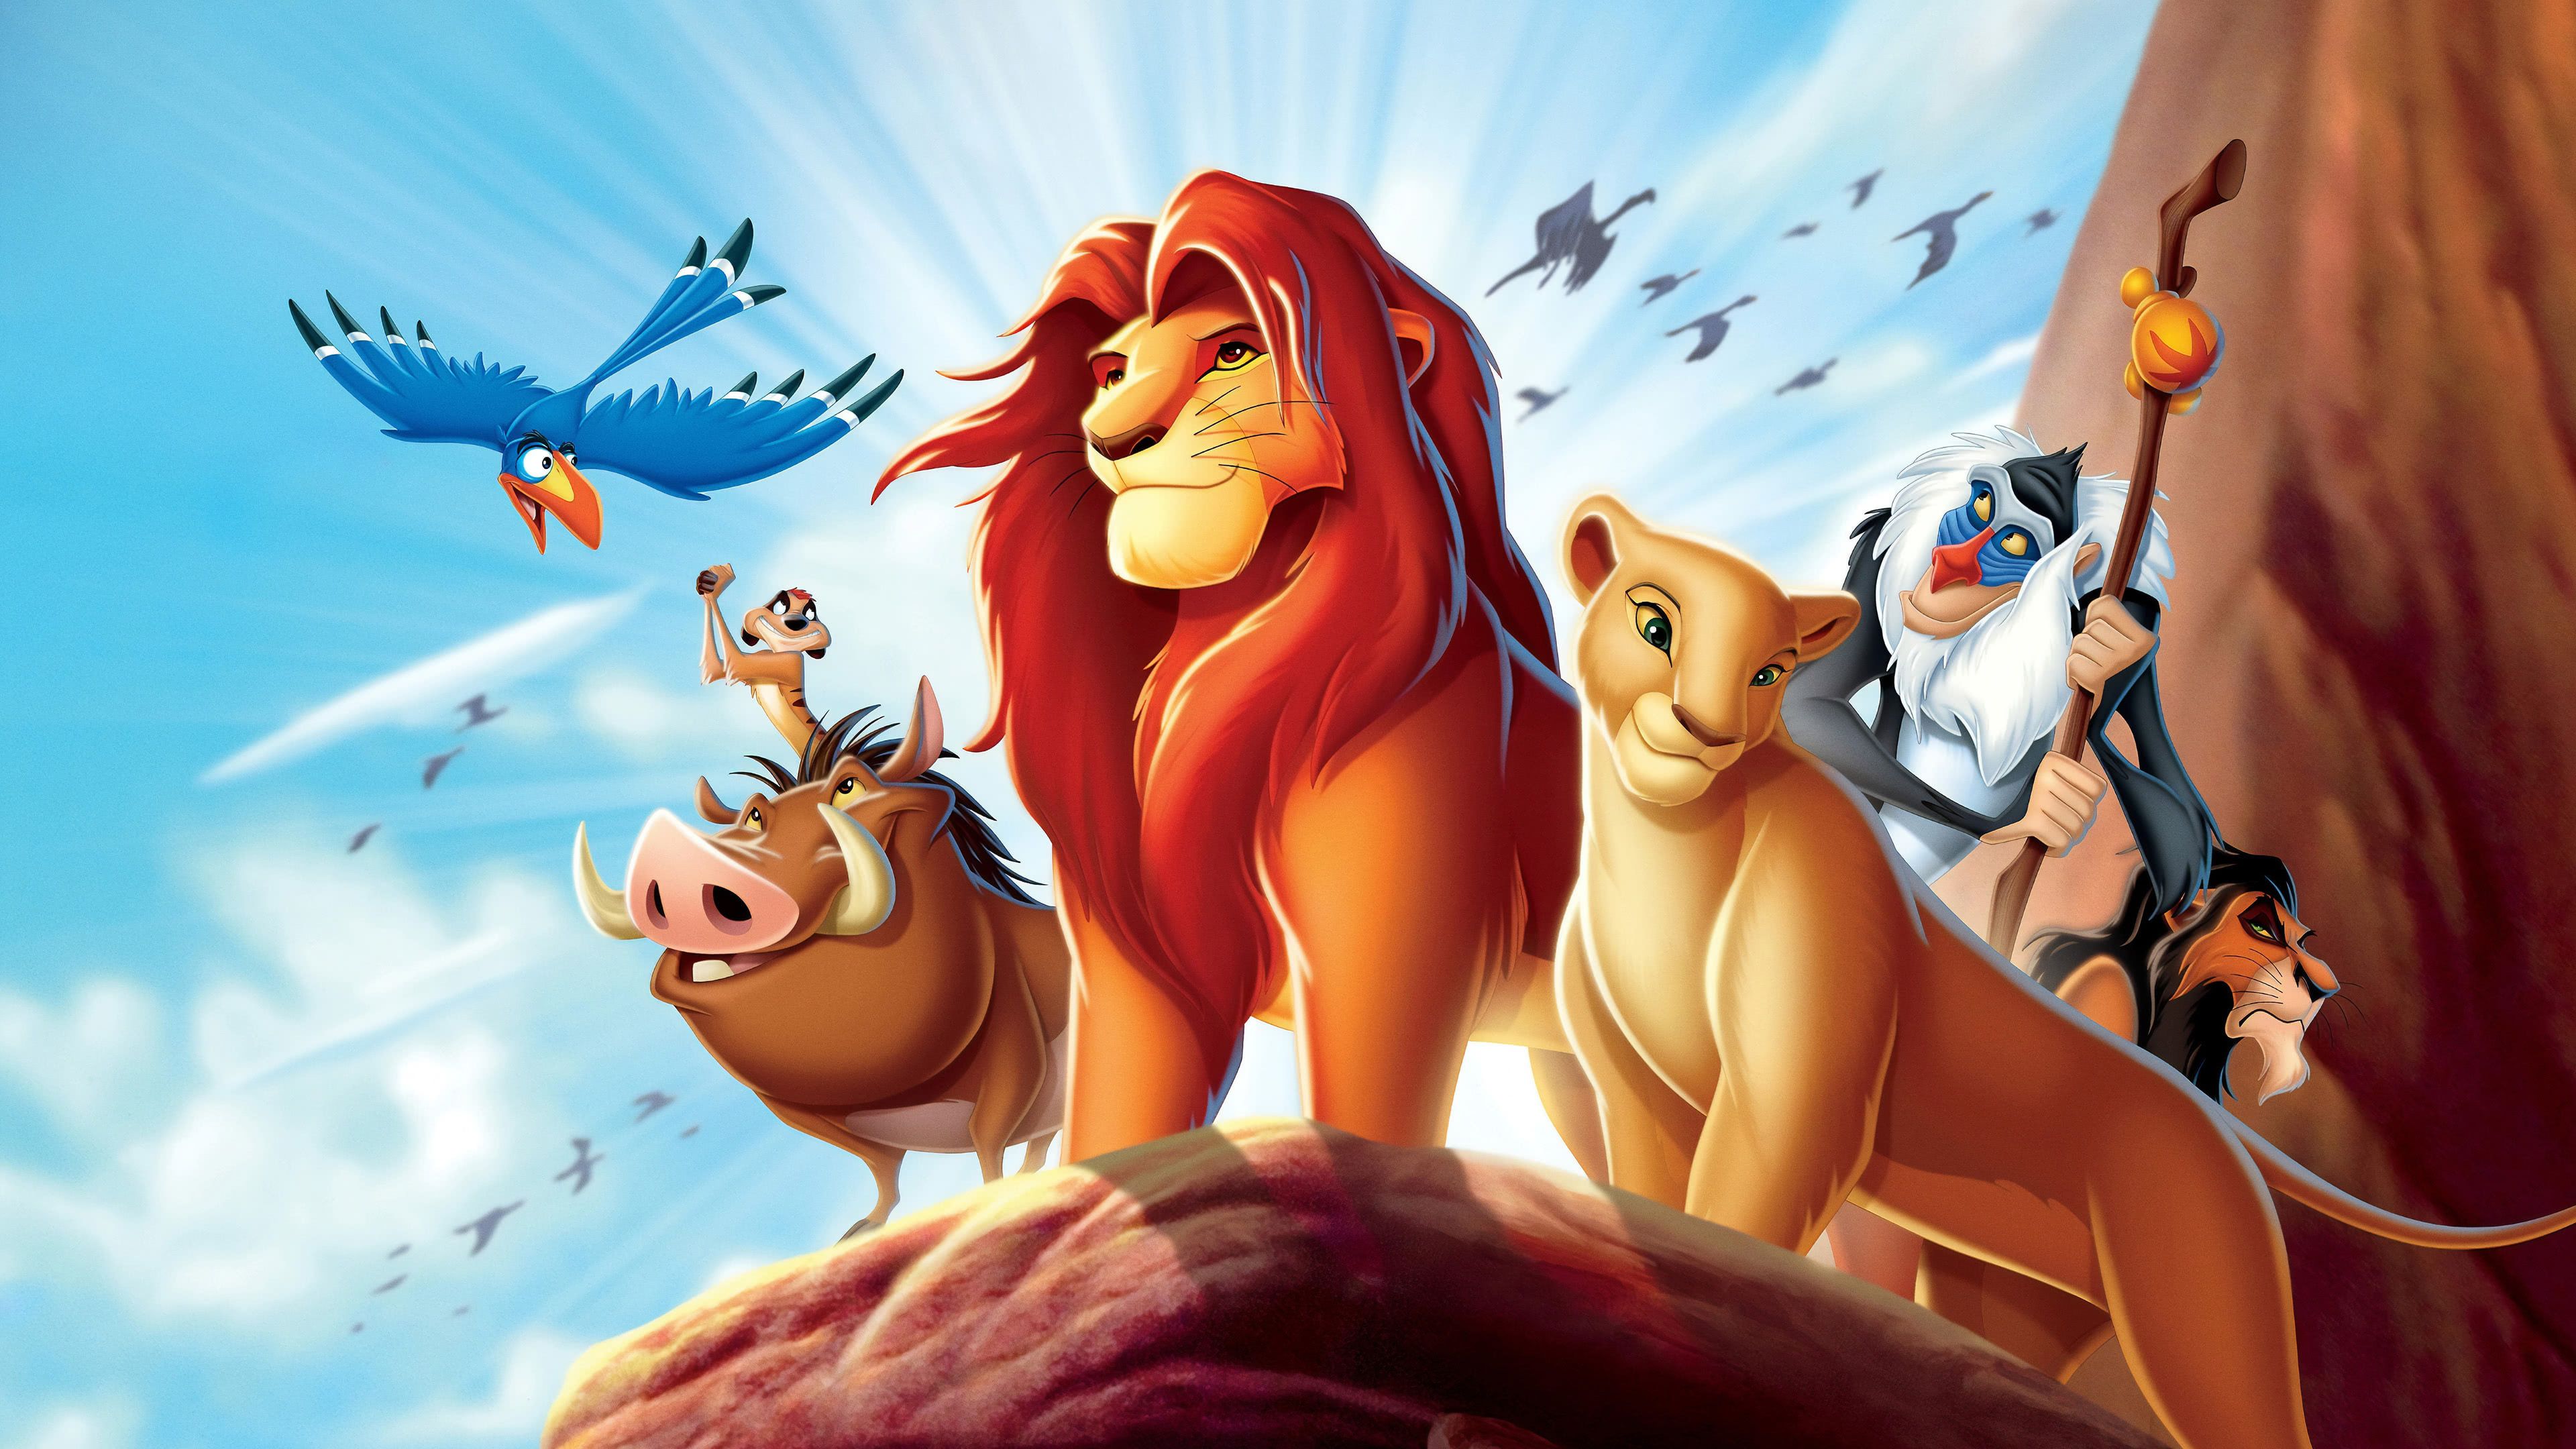 El Rey León Simba Nala Timon y Pumbaa UHD 4K fondo de pantalla | Pixelz